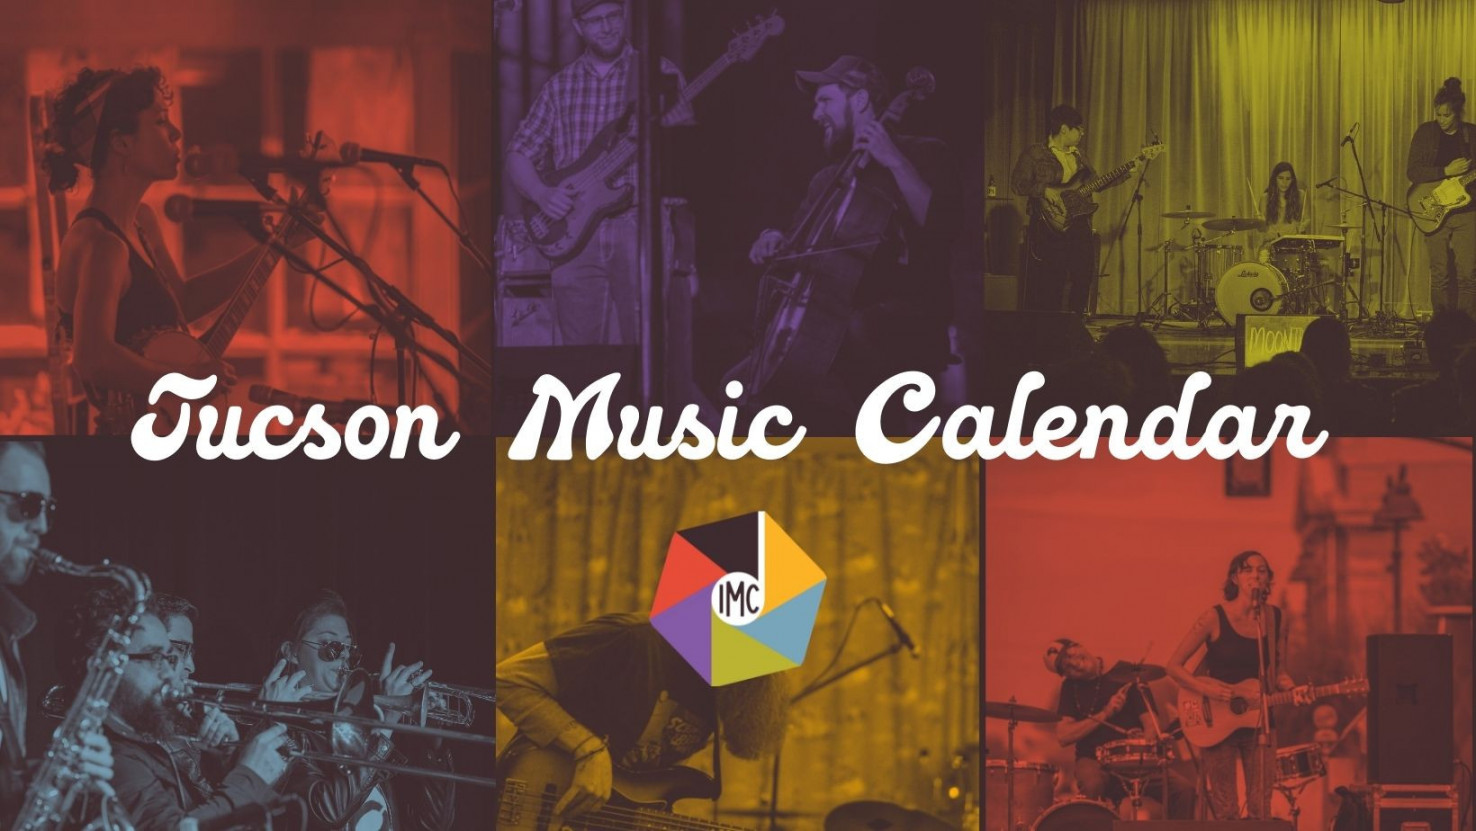 Tucson Music Calendar